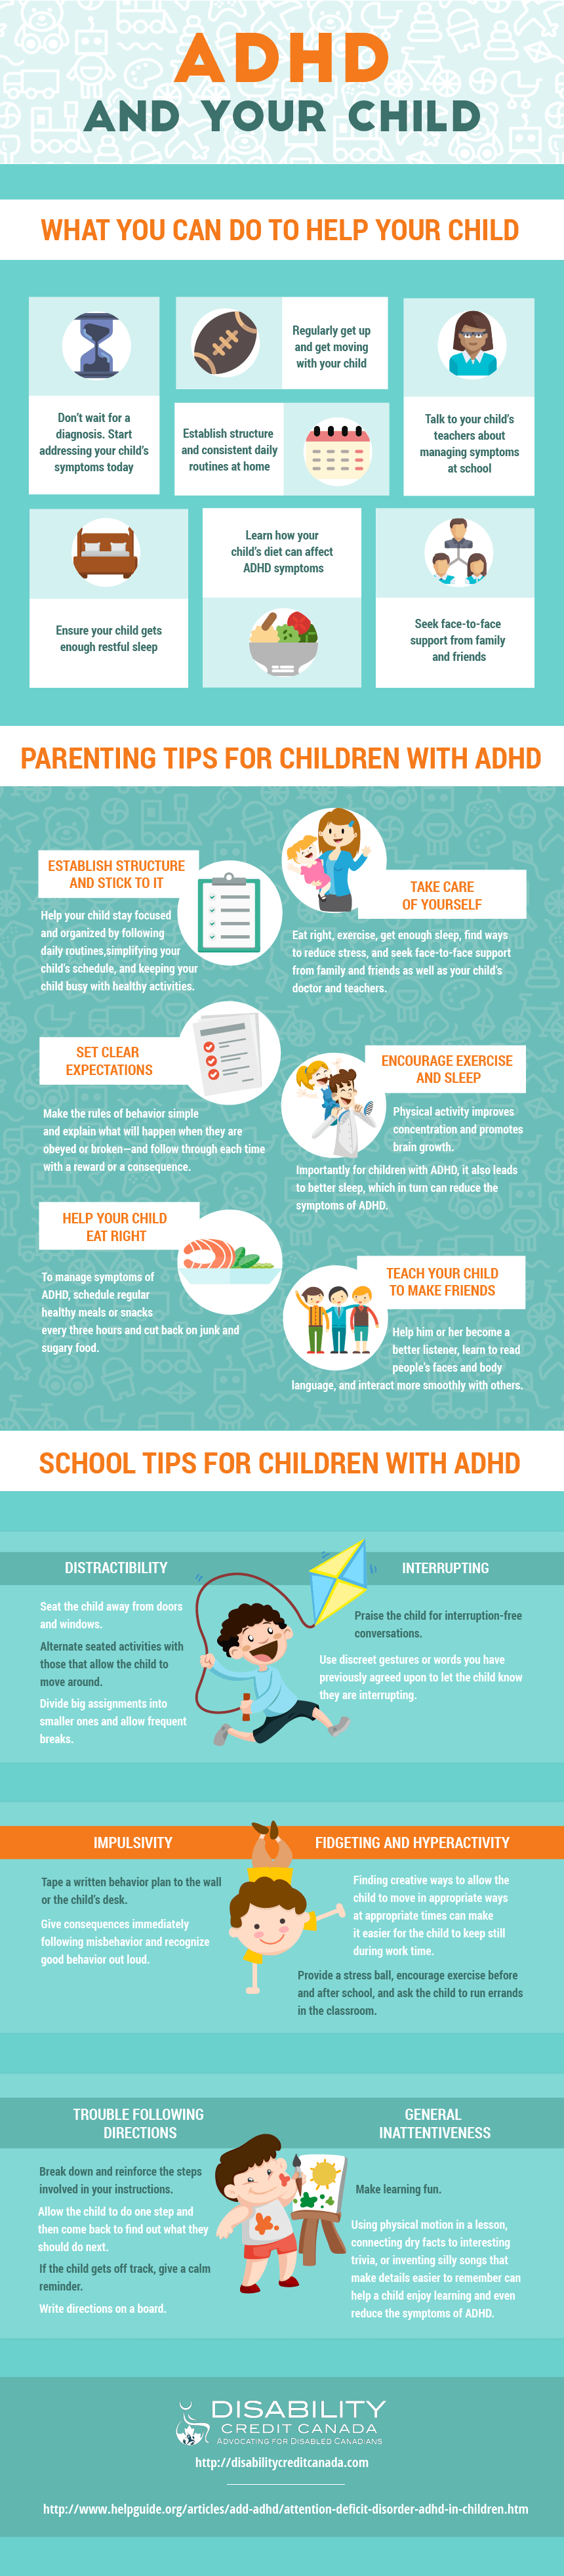 ADHD in Children Infographic